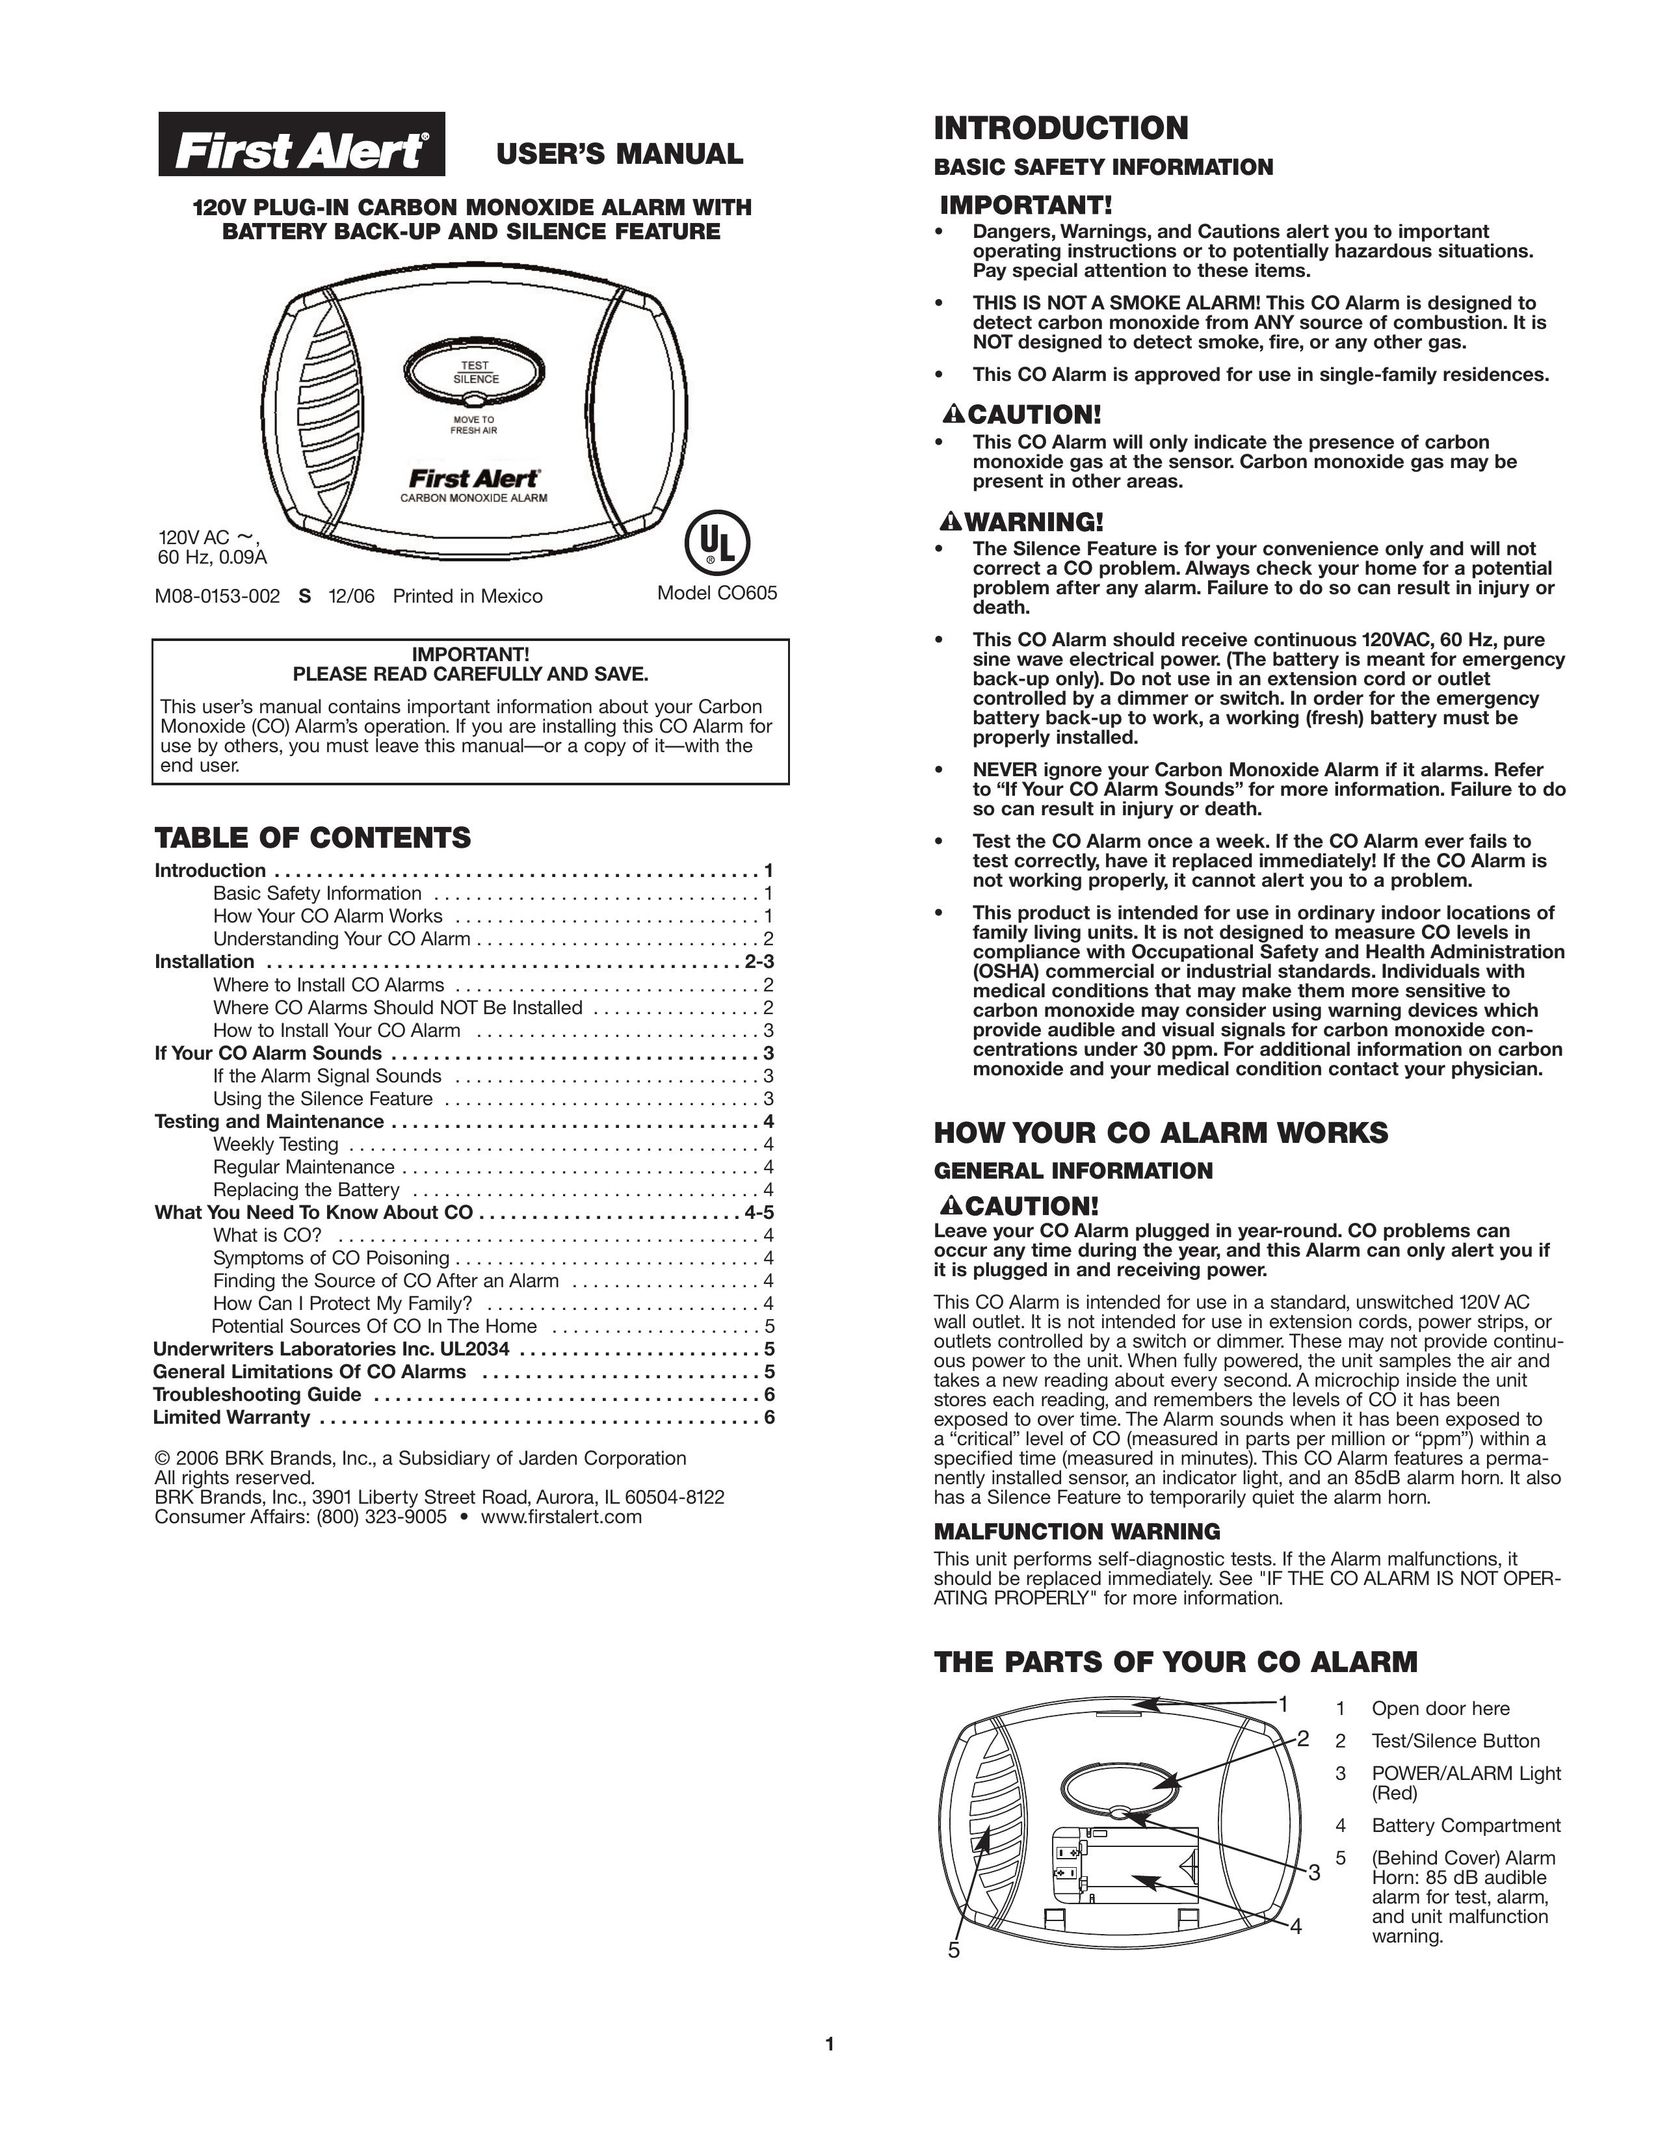 First Alert CO605 Carbon Monoxide Alarm User Manual